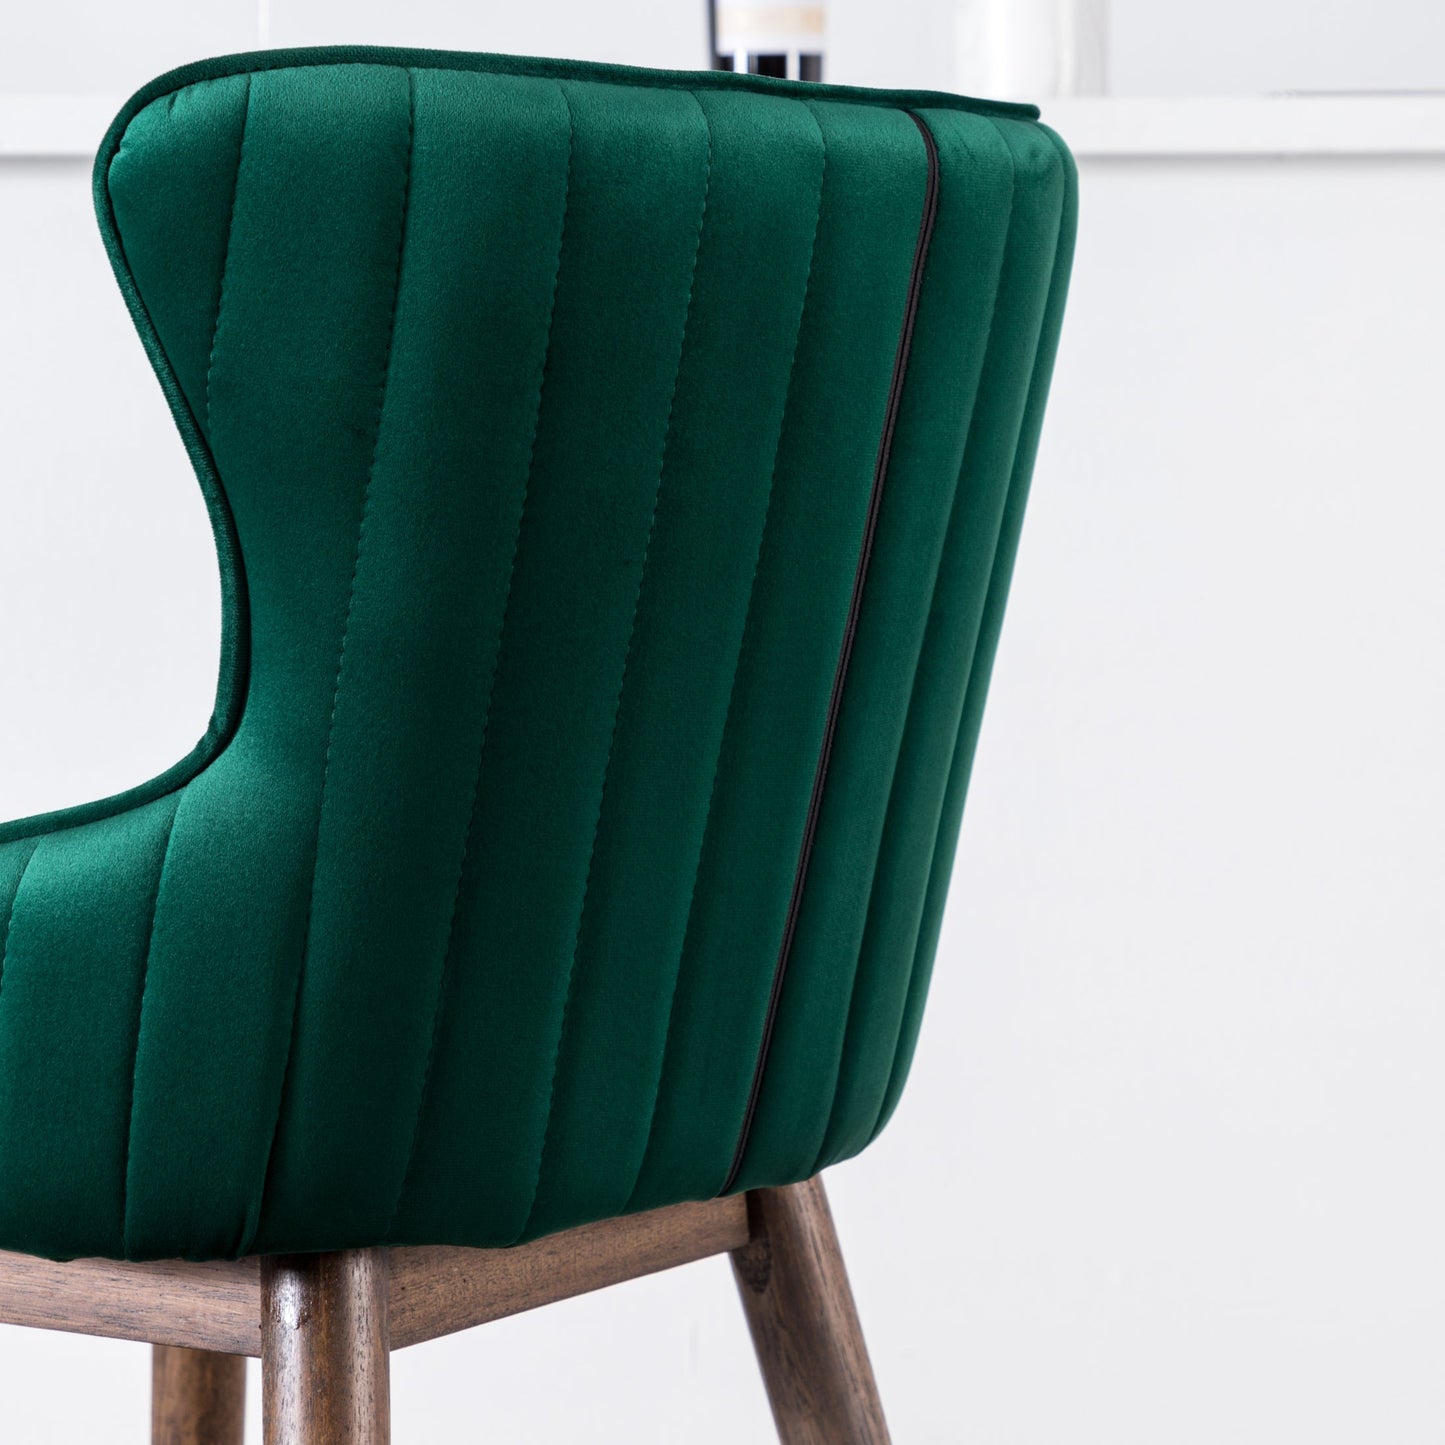 Leland Fabric Upholstered Wingback Bar Stools, Set of 2, Green